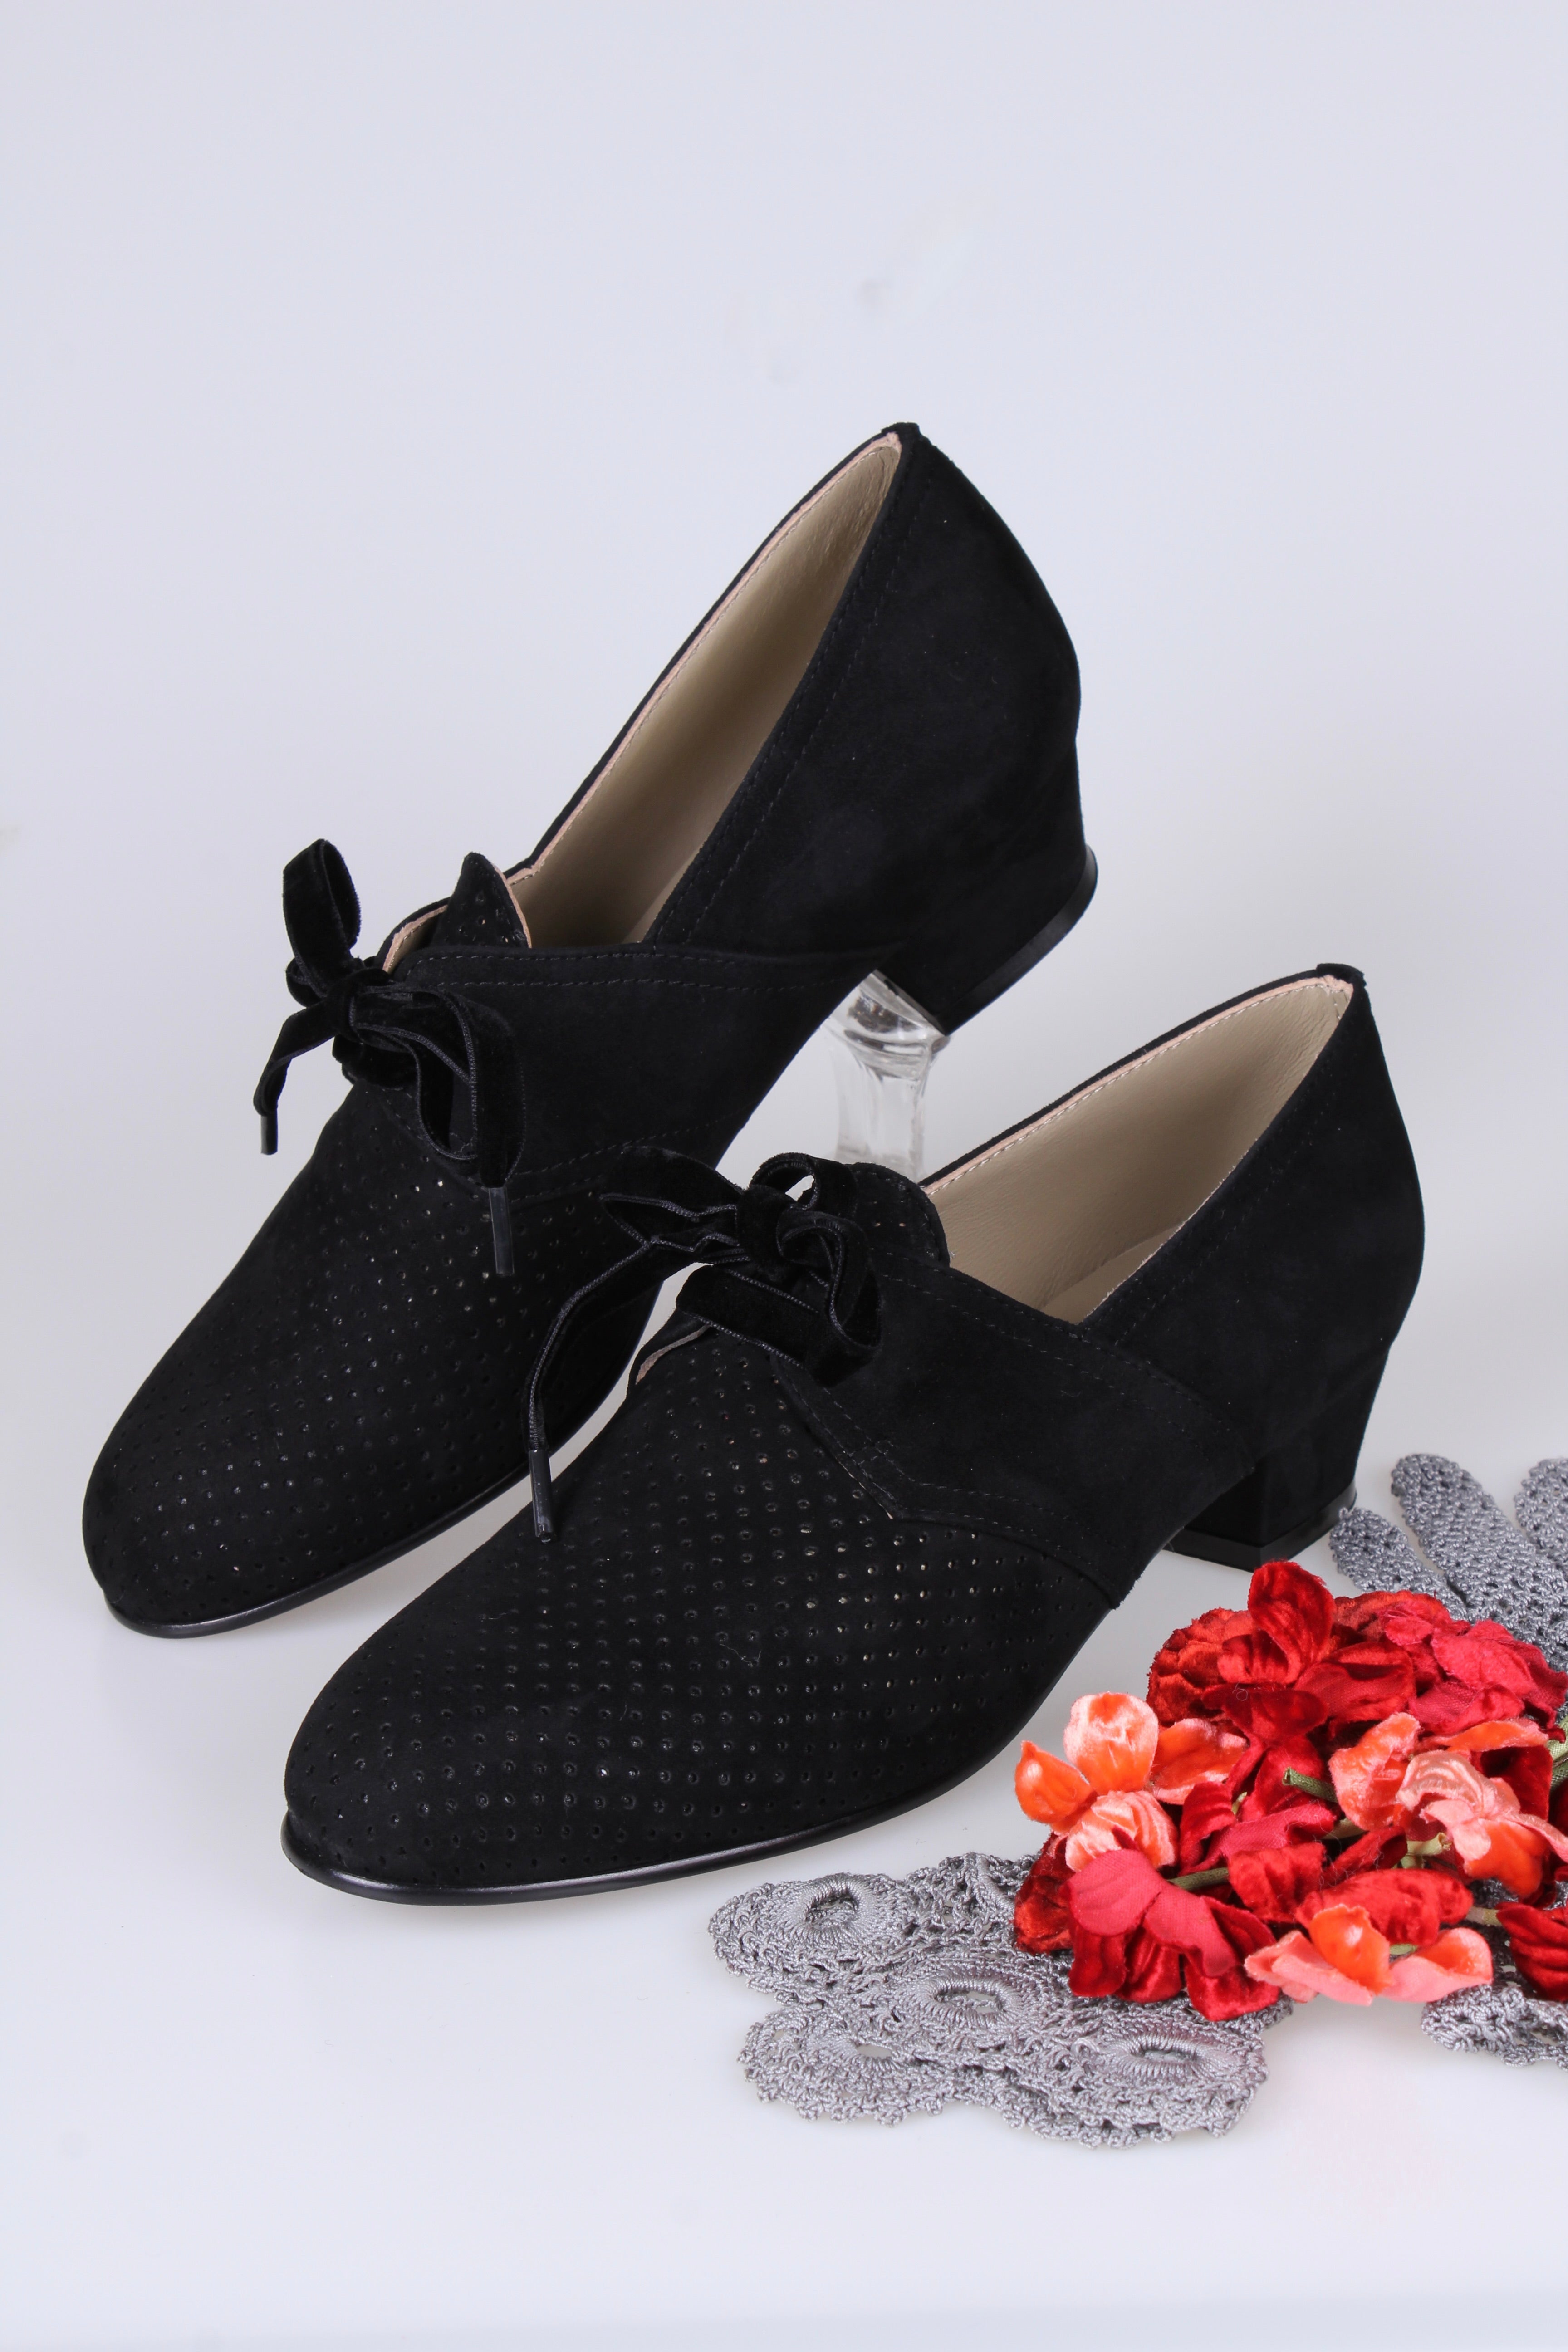 Womens Block Low Heels Casual Office Ol Work Slip On Shoes Black Round Toe  Pumps | eBay